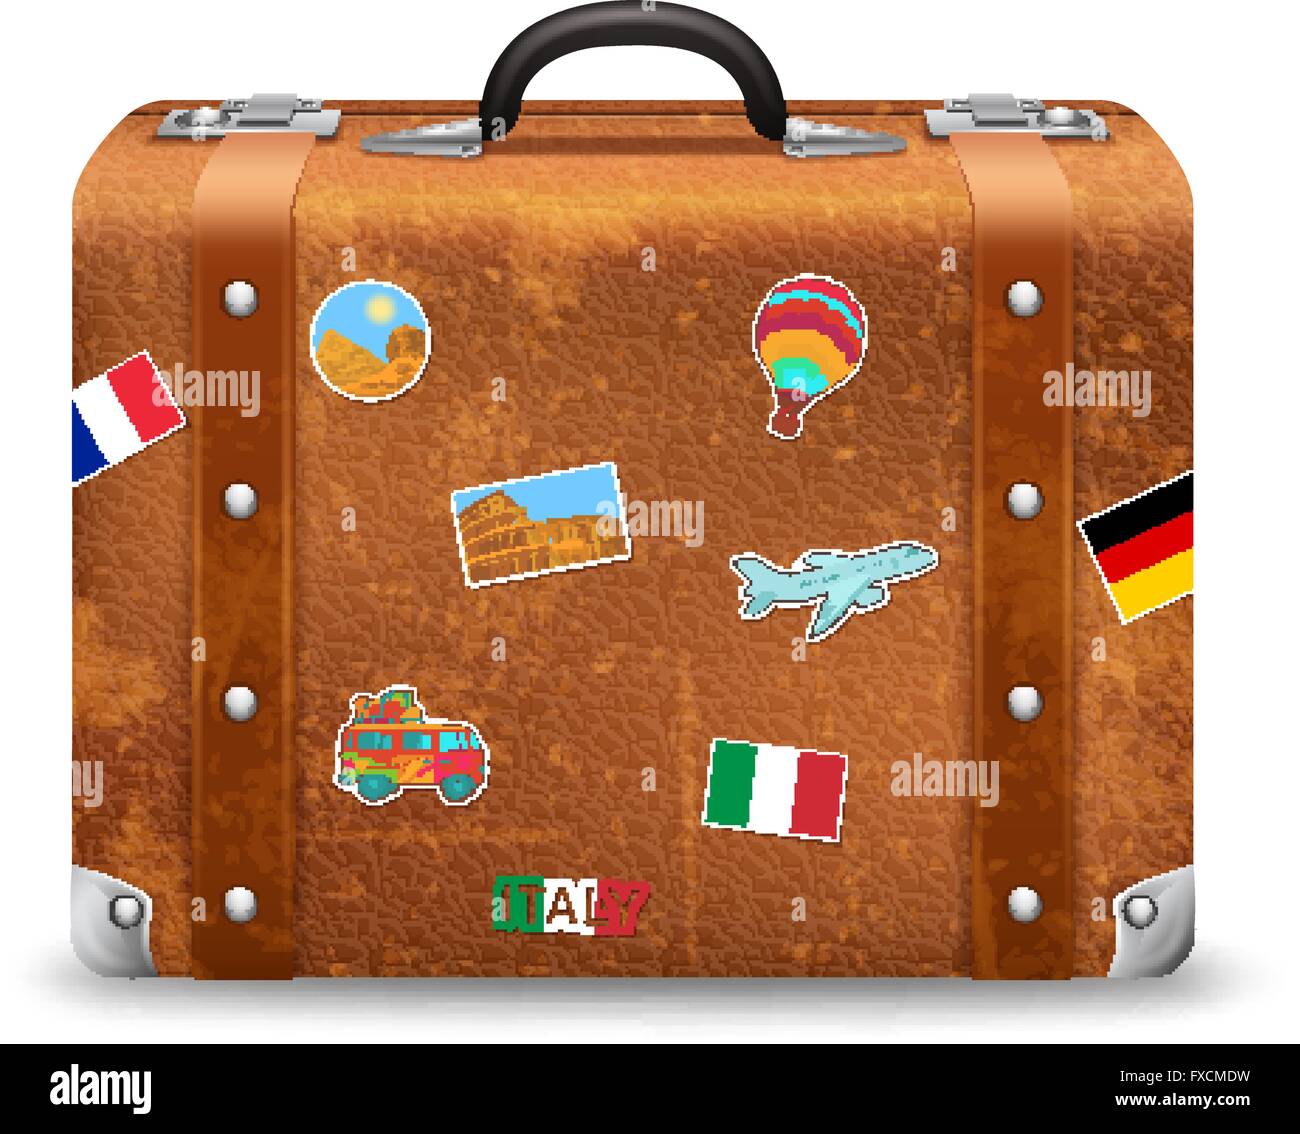 Alter Koffer mit Travel-Aufkleber Stock-Vektorgrafik - Alamy